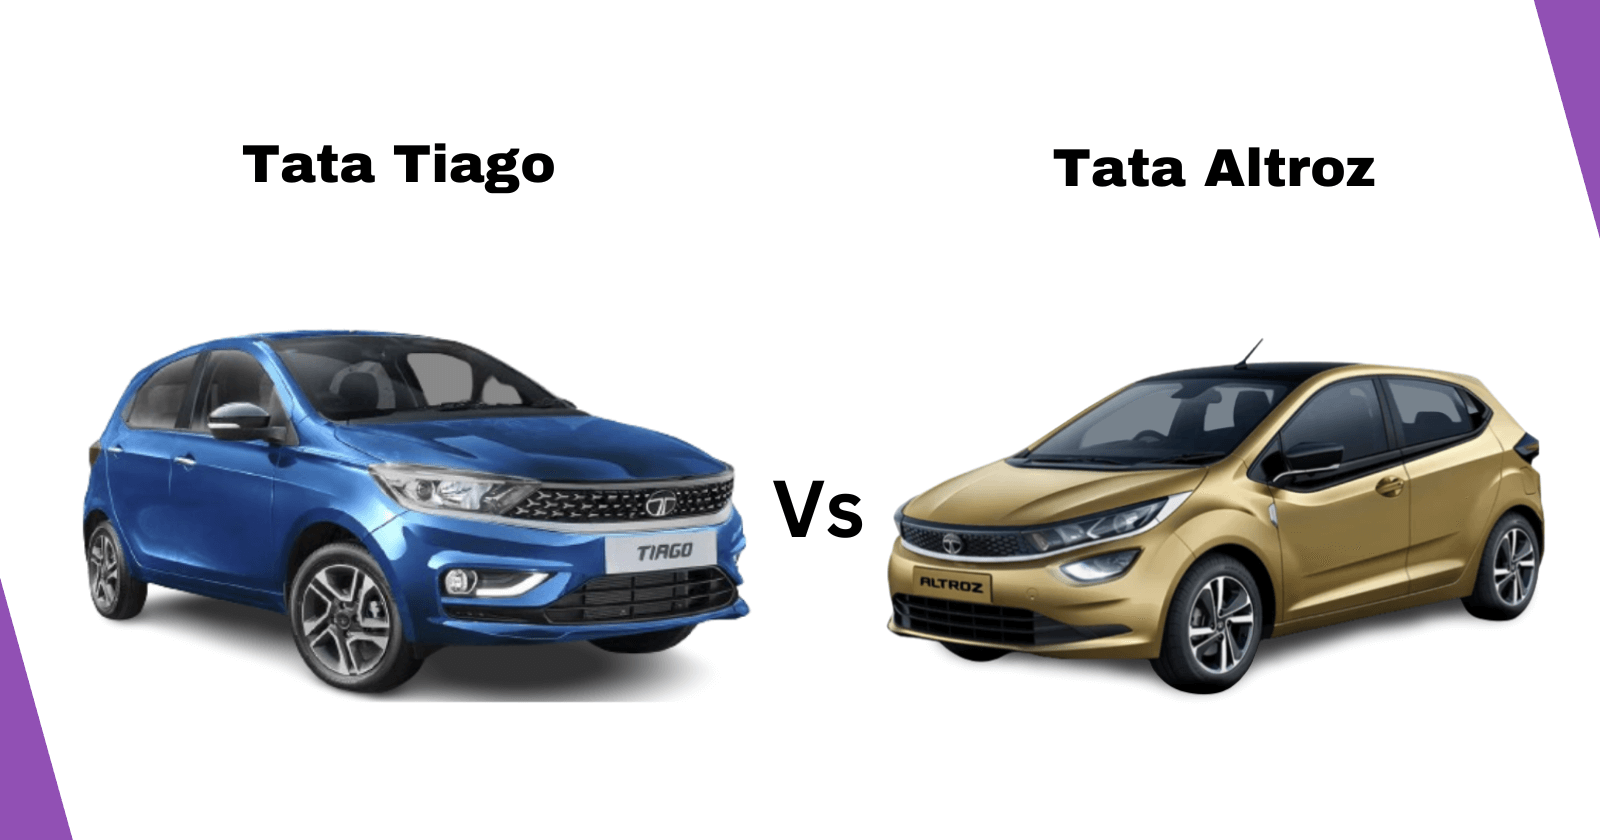 Tata Tiago vs Tata Altroz